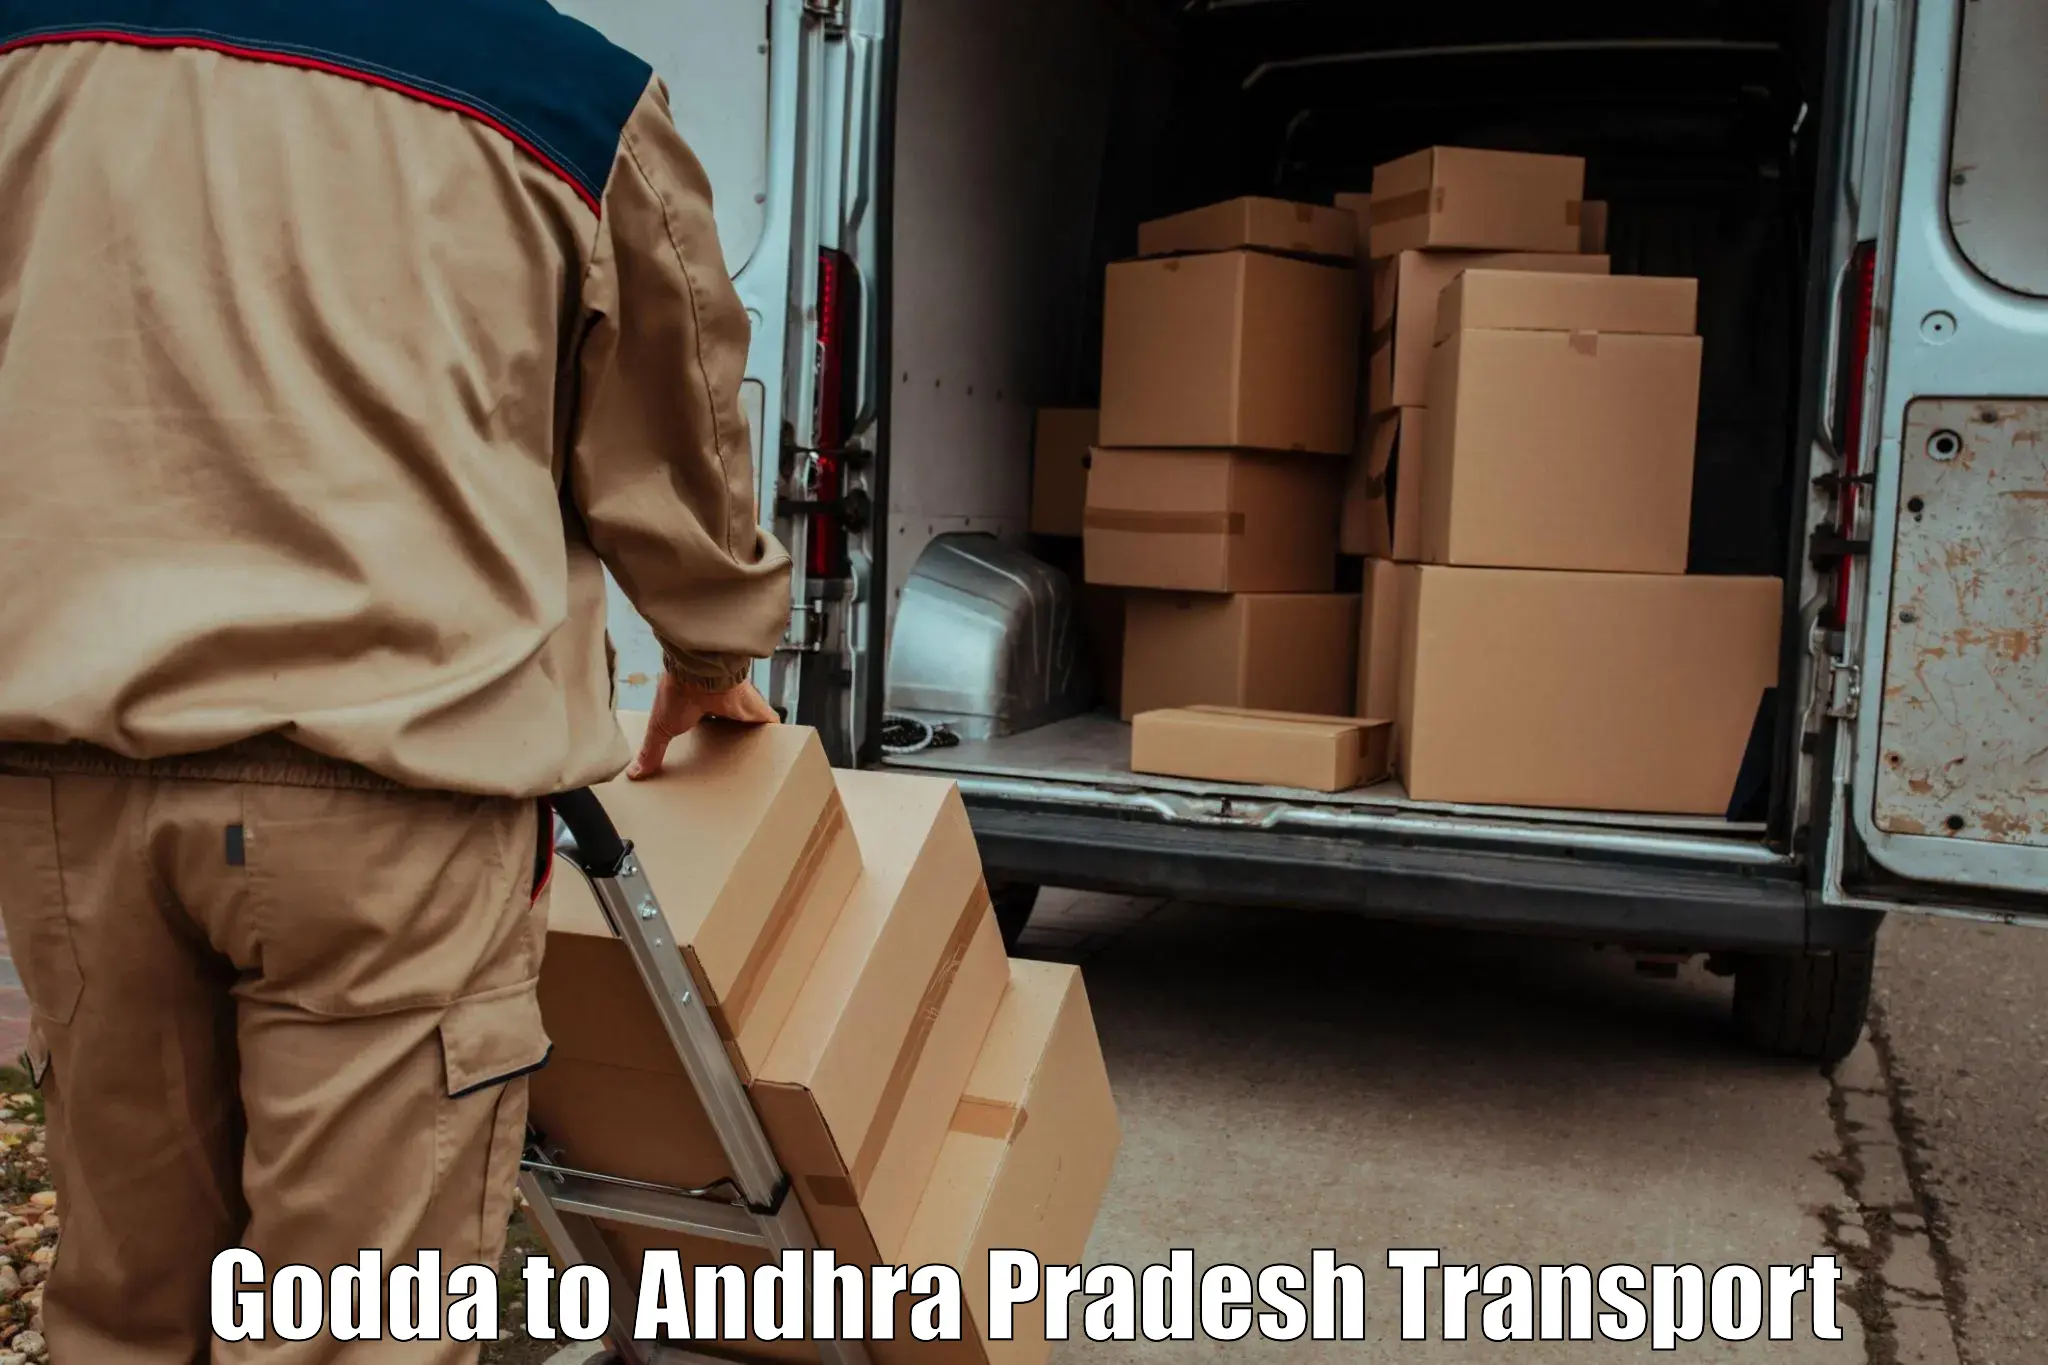 Bike transport service Godda to Krishna AP